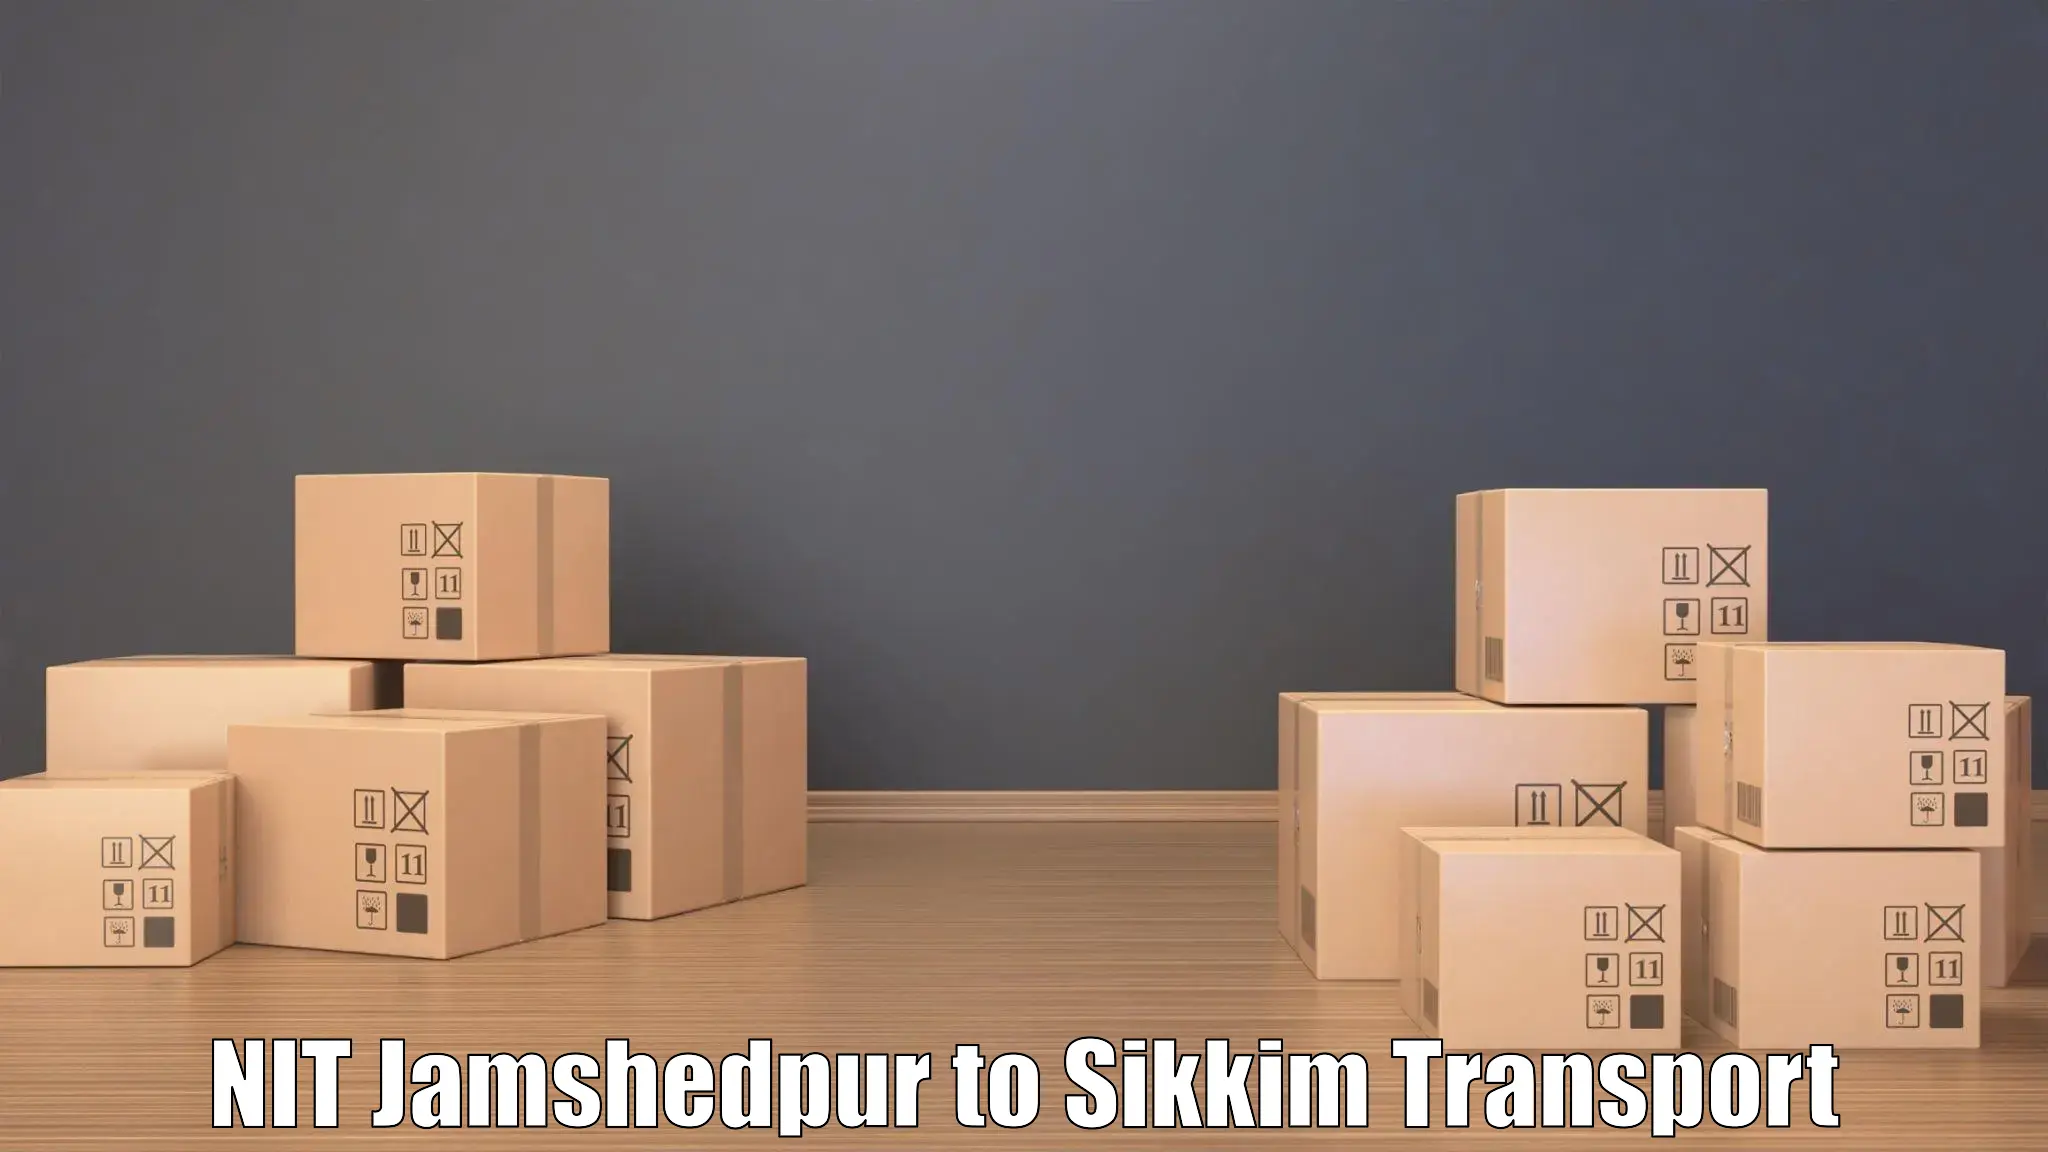 Nearest transport service NIT Jamshedpur to Ranipool